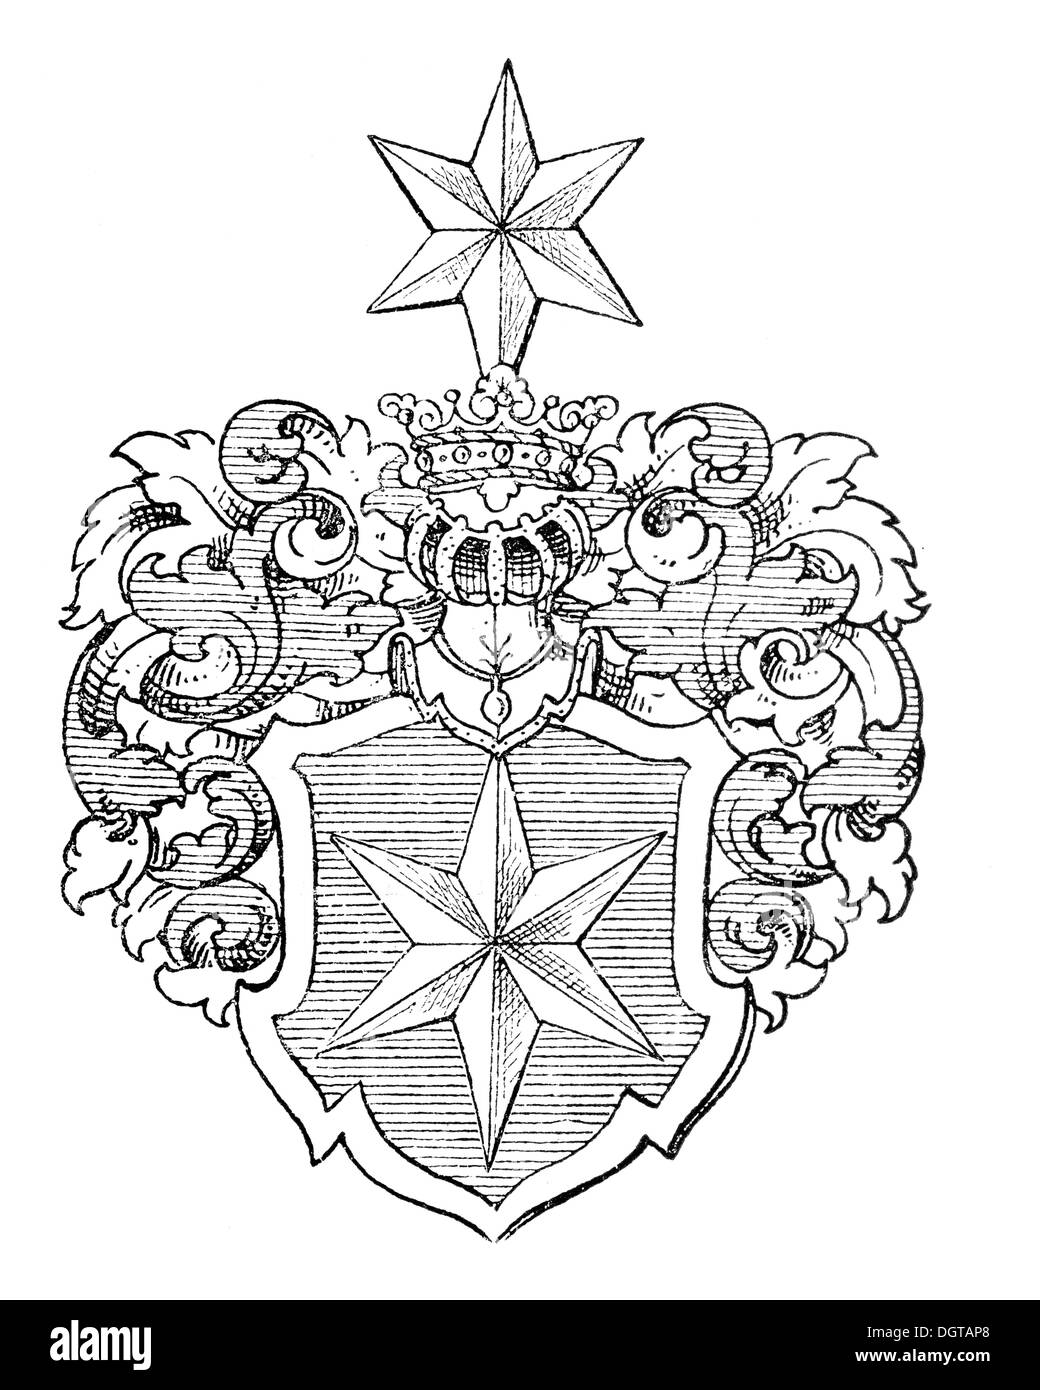 Goethe's coat of arms, historical illustration in Deutsche Literaturgeschichte or German literature from 1885 Stock Photo